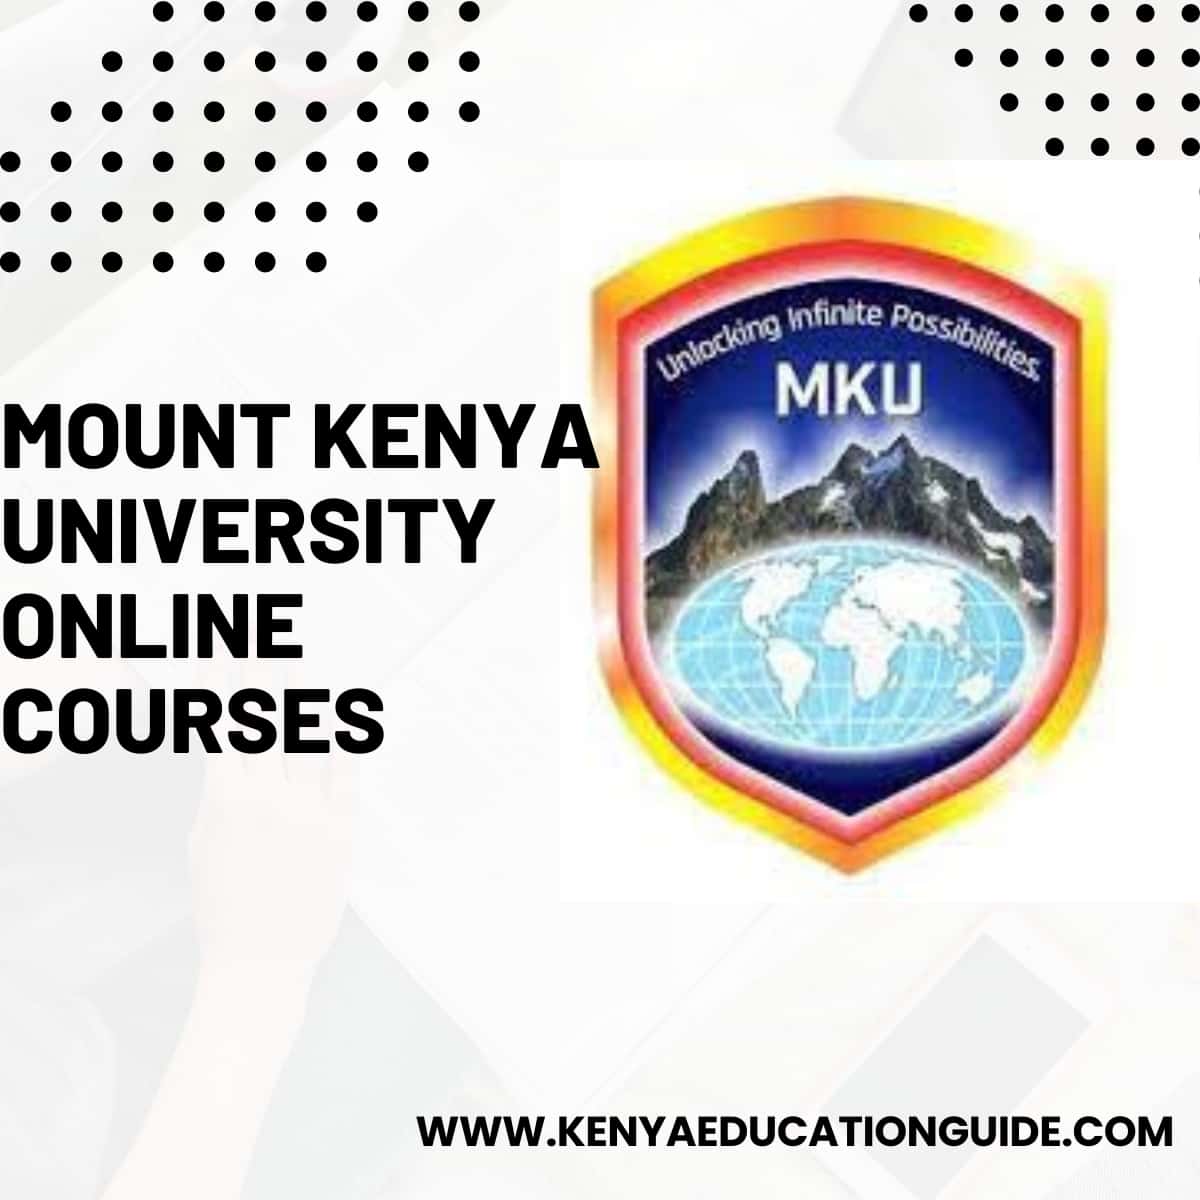 Mount Kenya University Online Courses